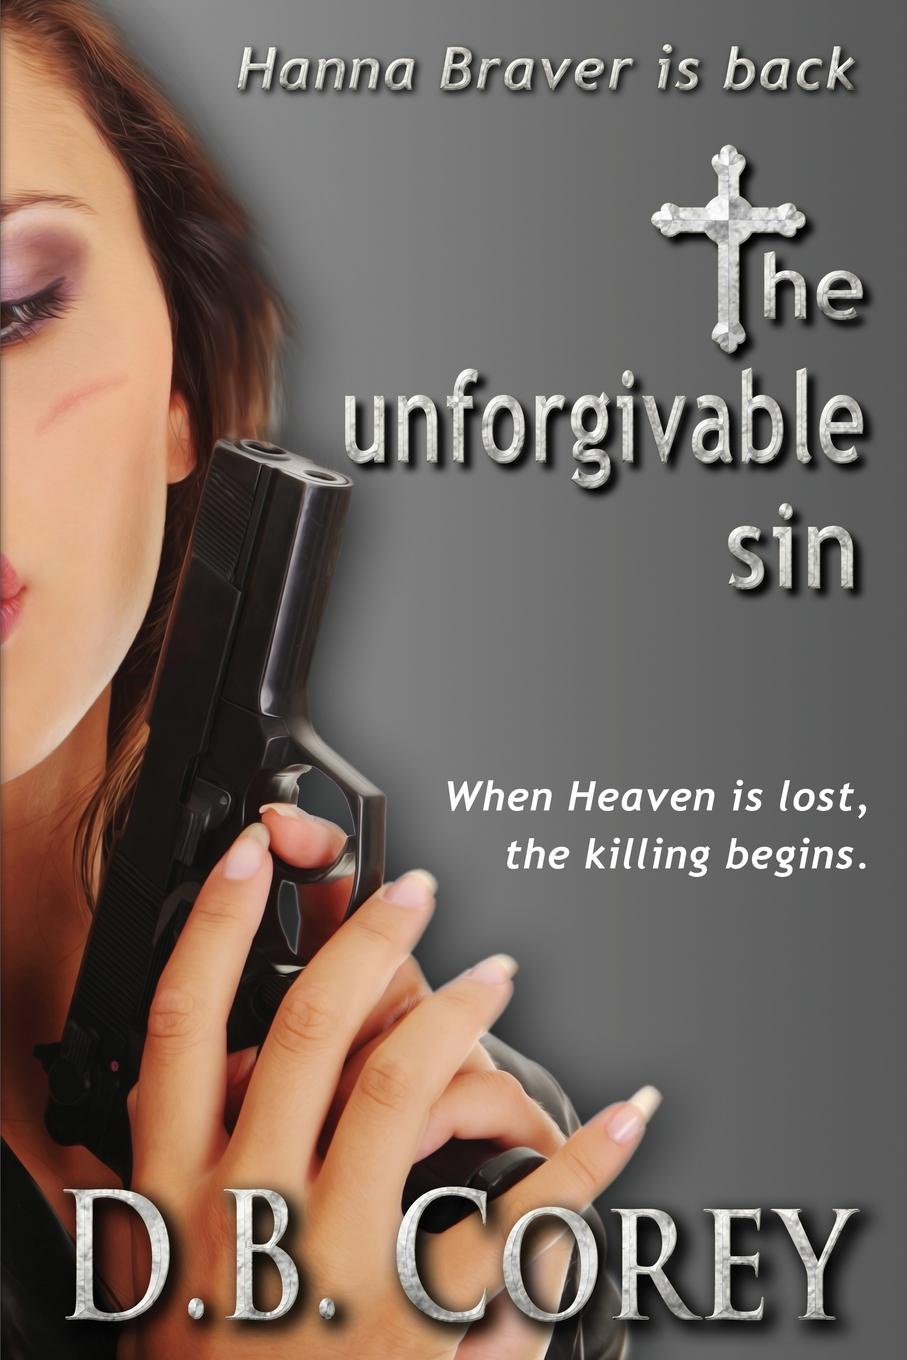 The Unforgivable Sin. When Heaven is lost, the killing begins.